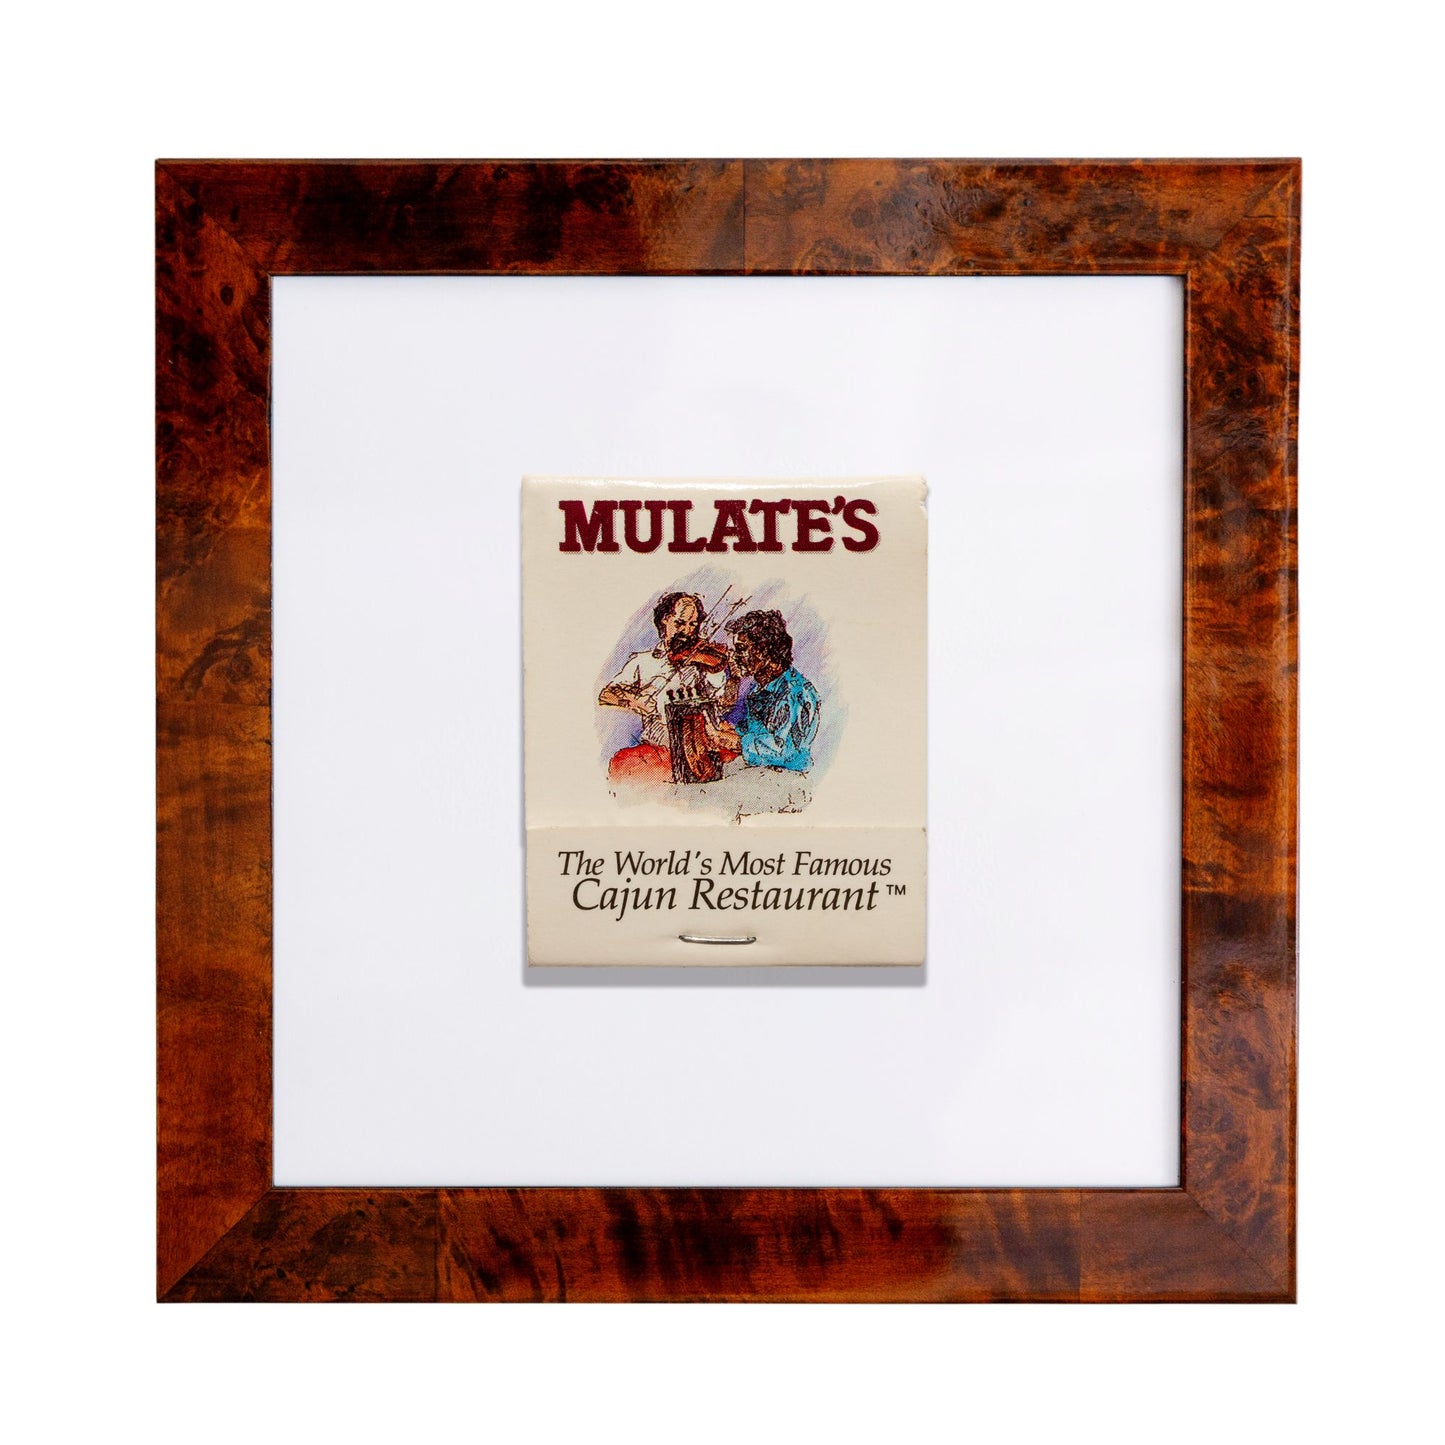 Mulate's